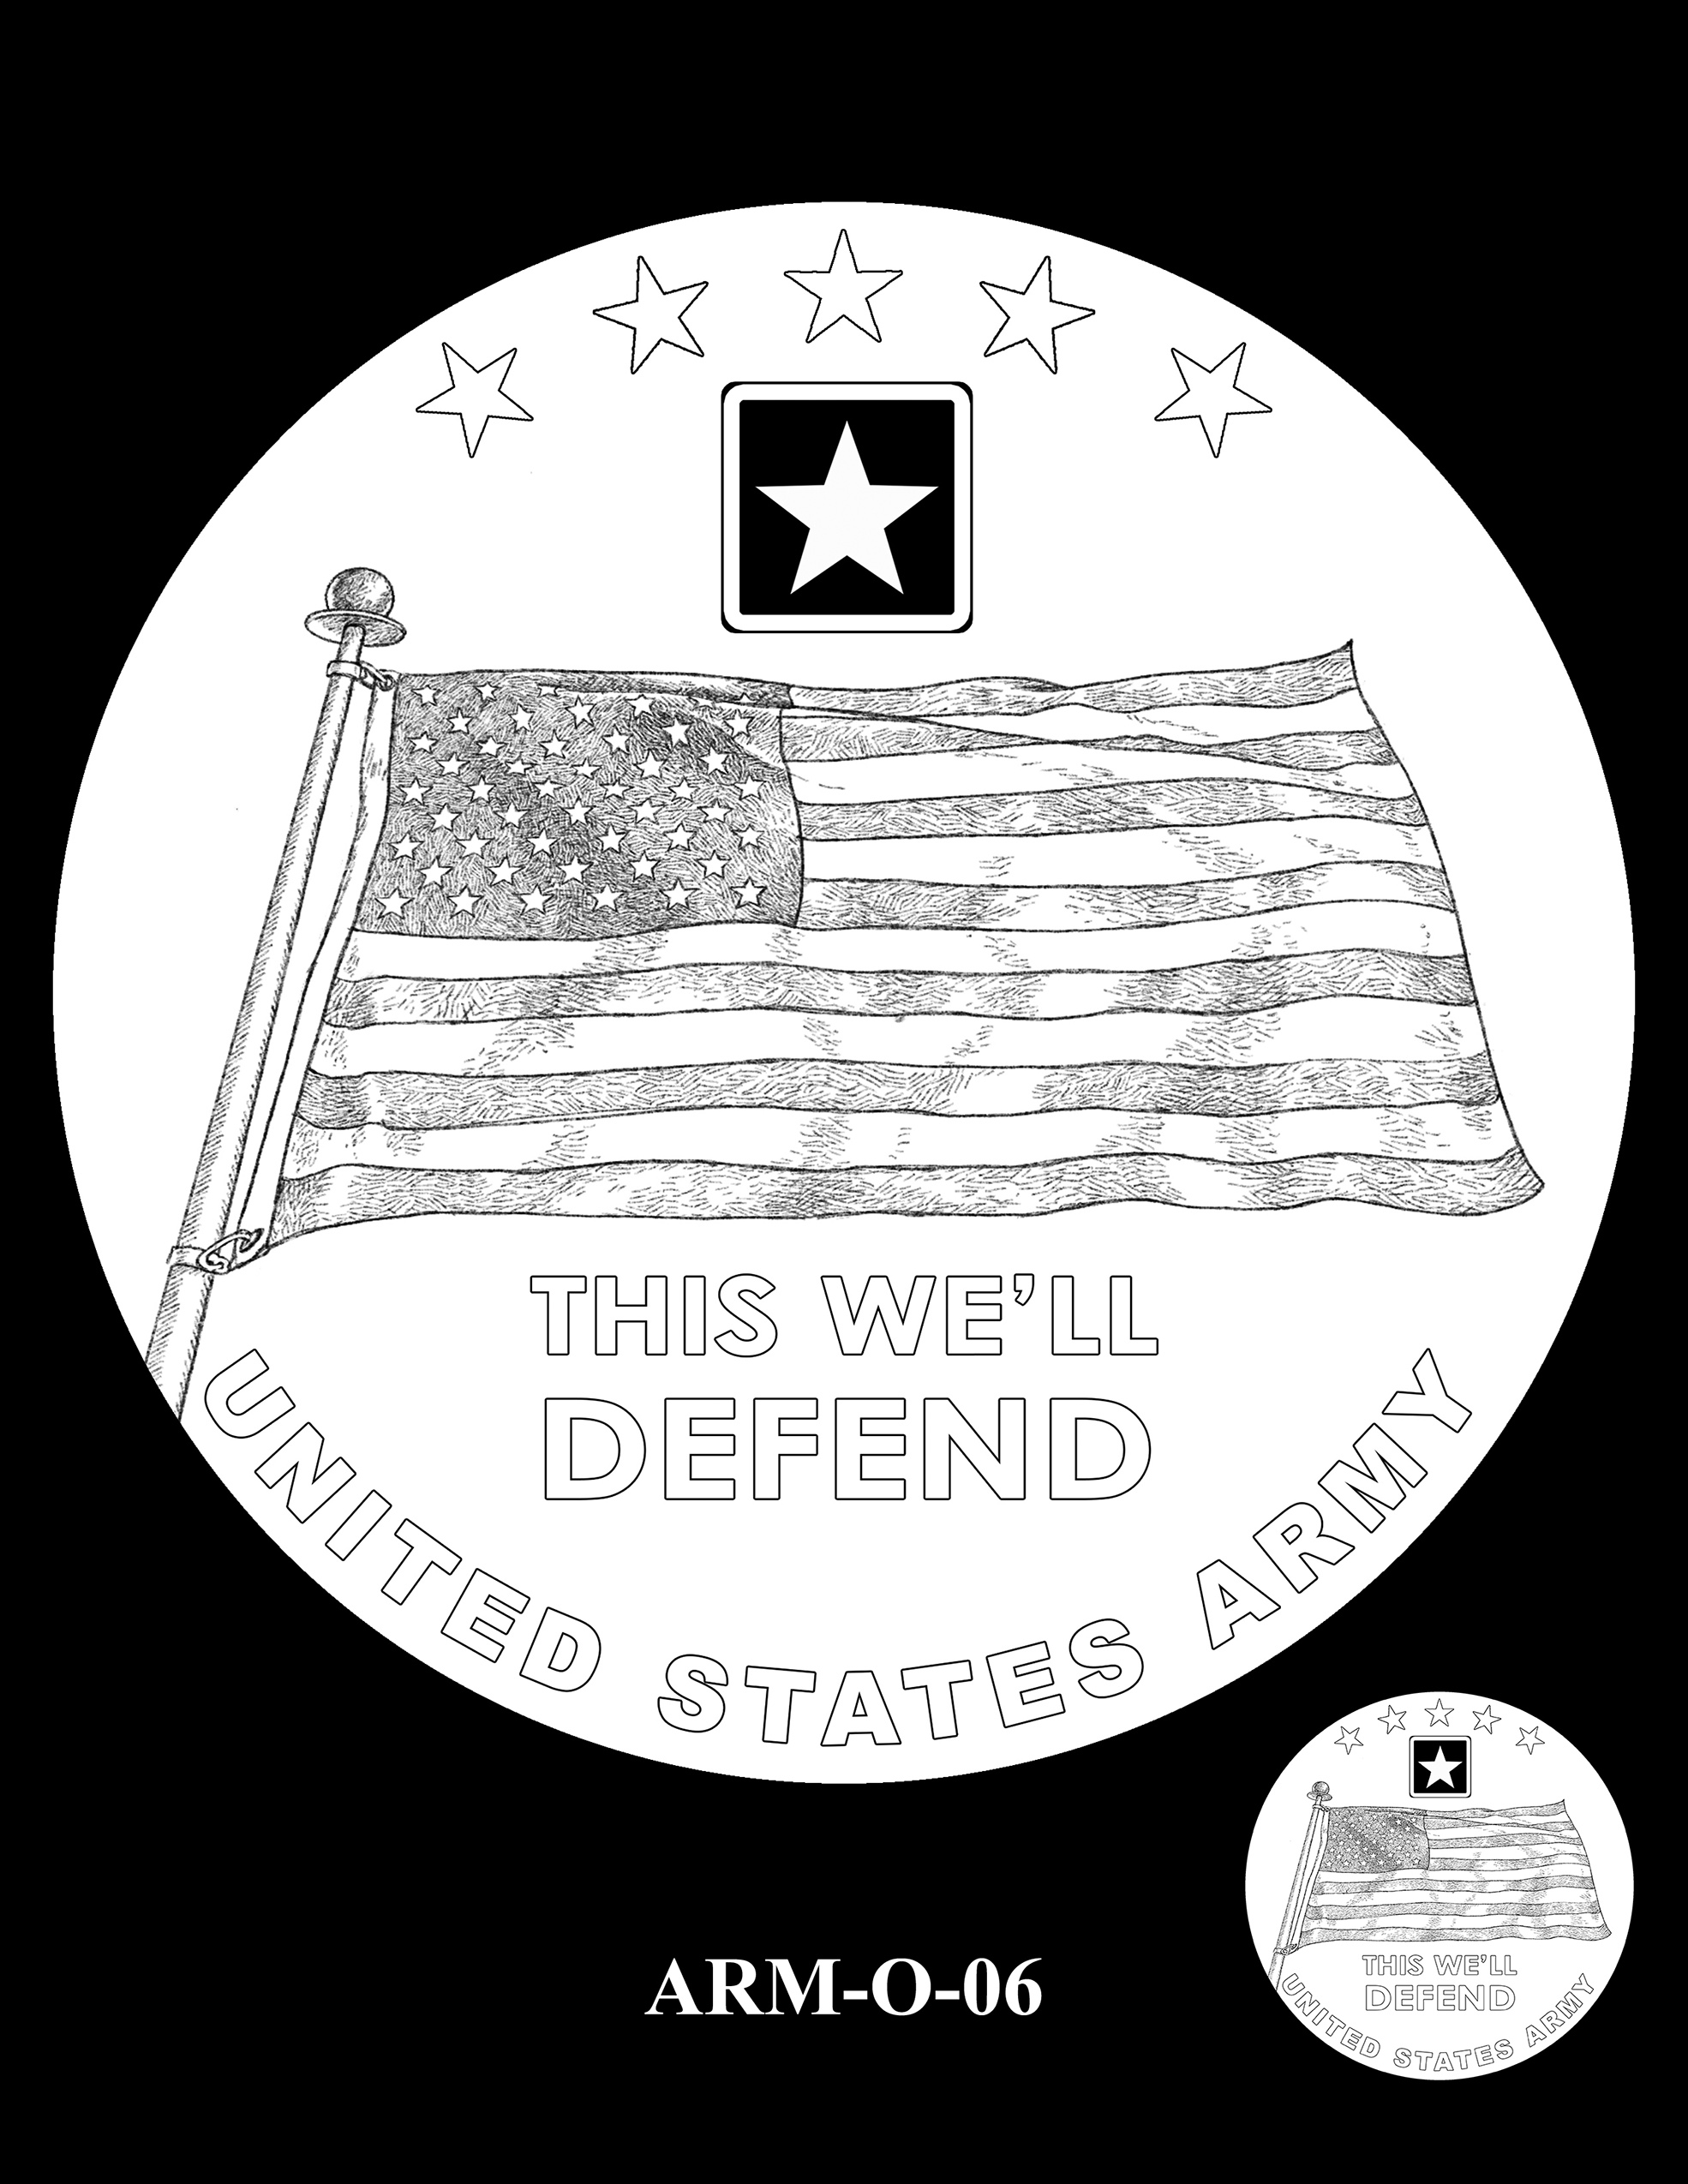 ARM-O-06 -- United States Army Silver Medal